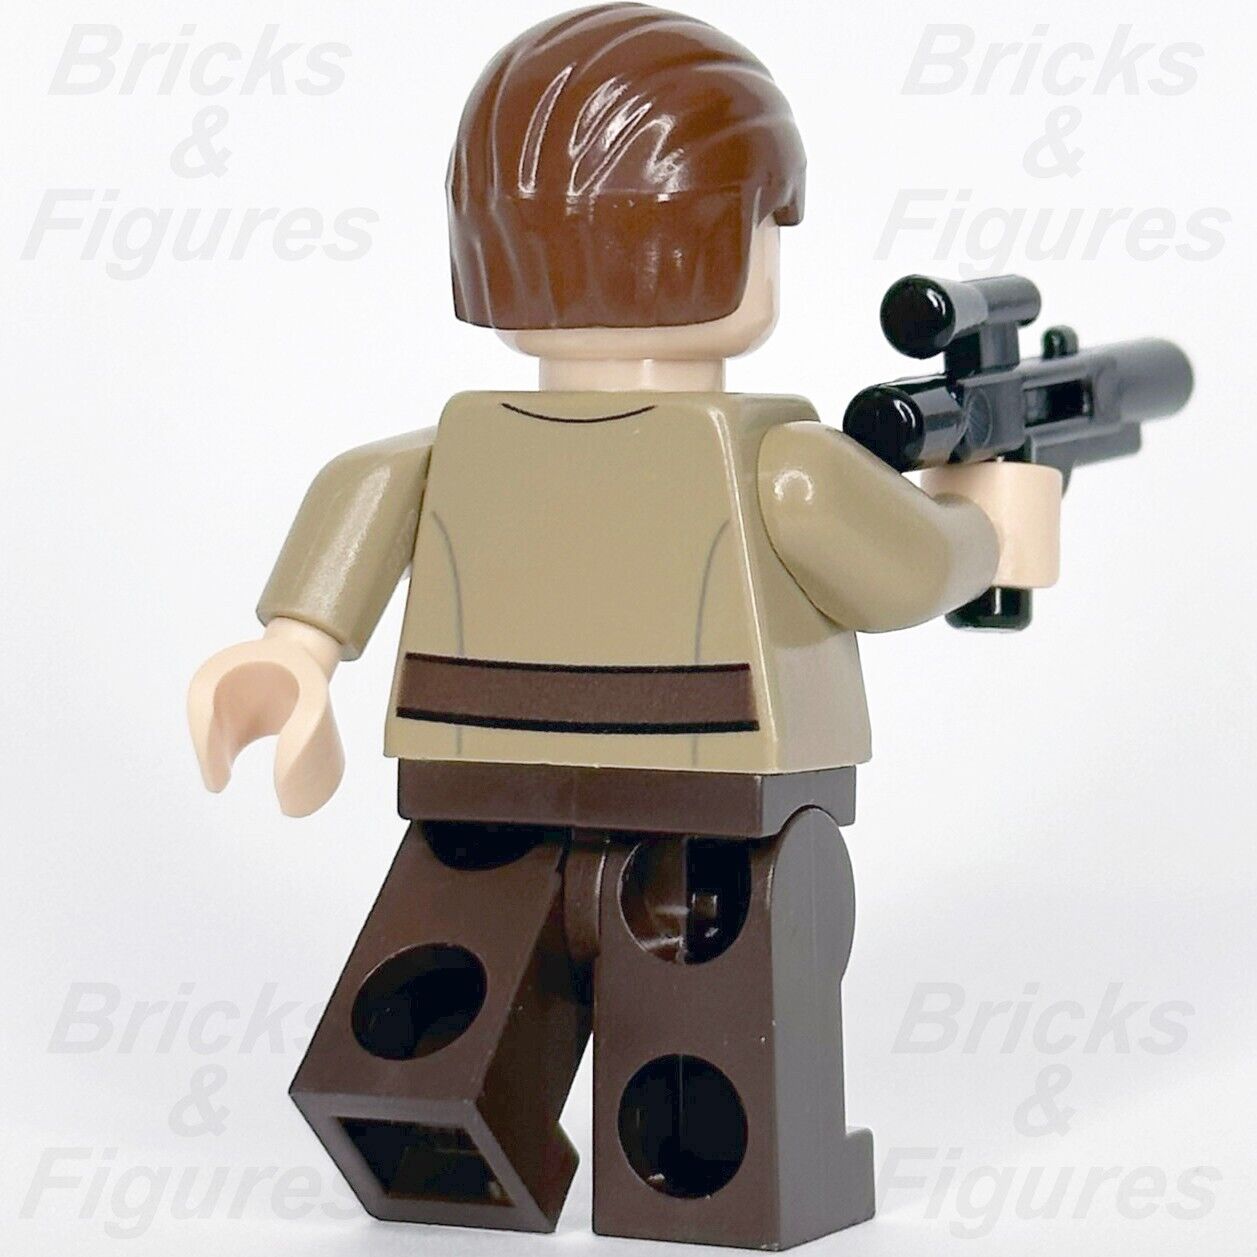 LEGO Star Wars Resistance Officer Minifigure Headset Print Pattern 75131 sw0699